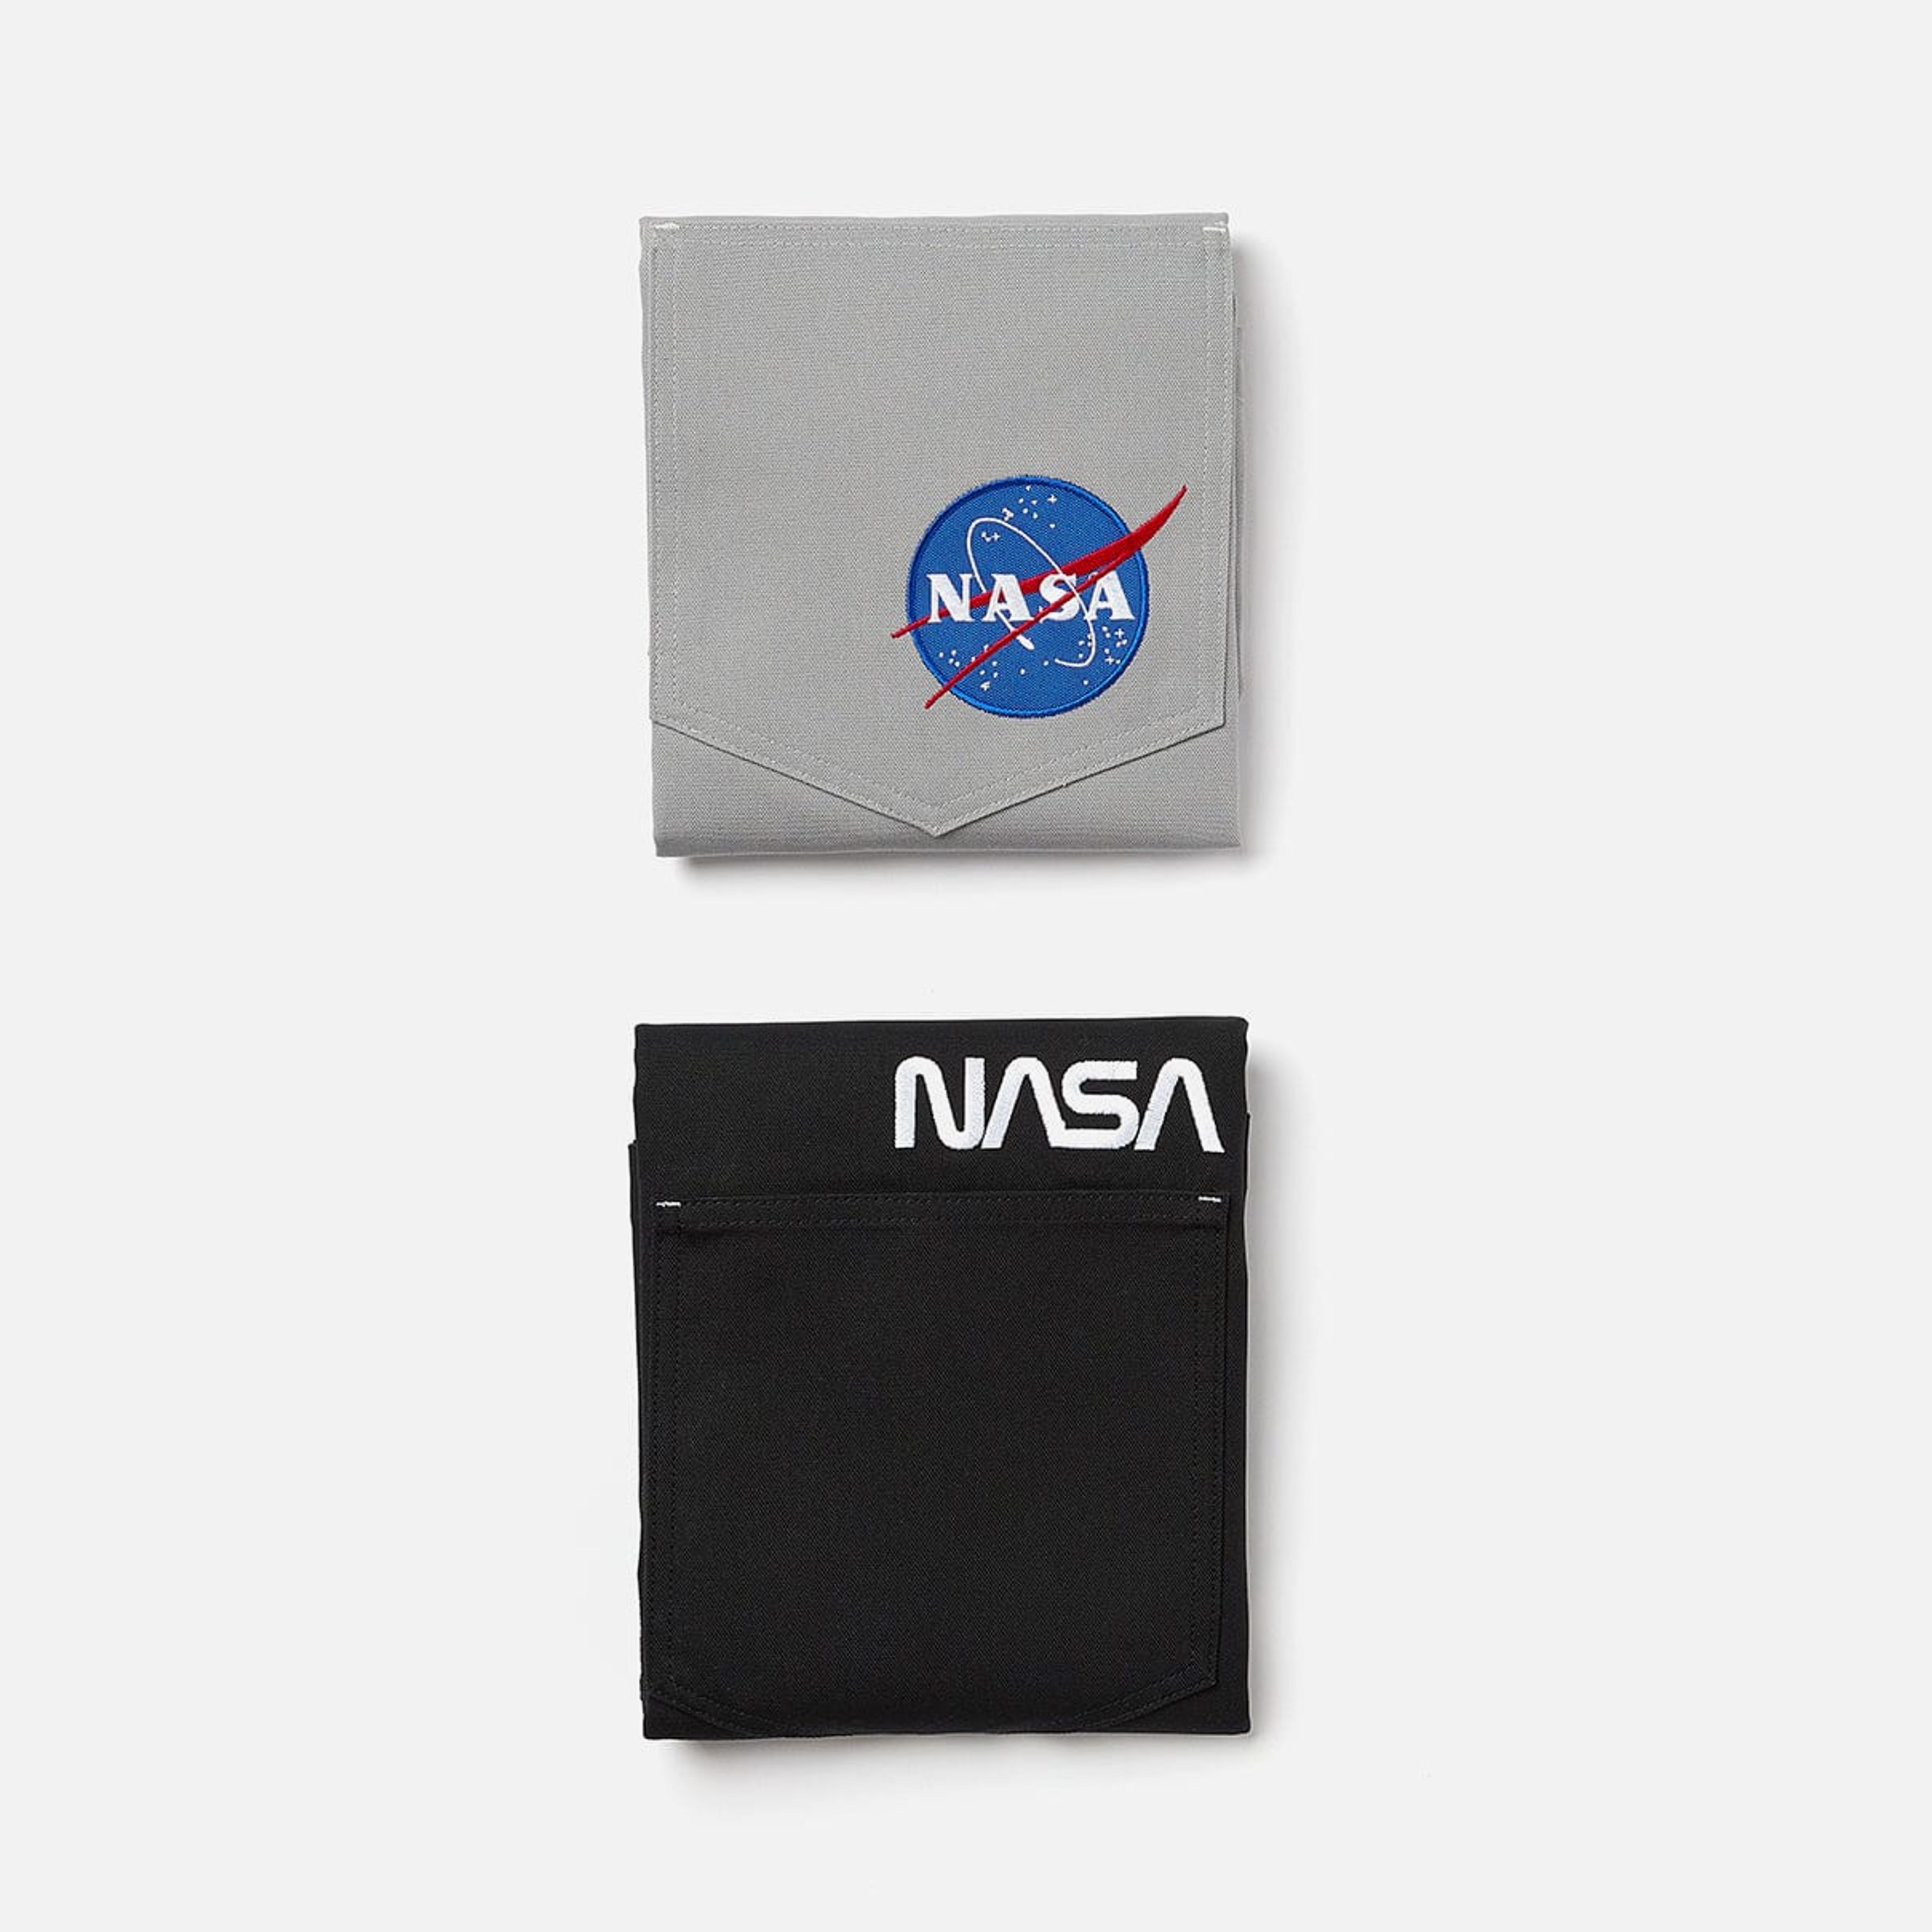 NASA Astronaut Essential Apron Bundle